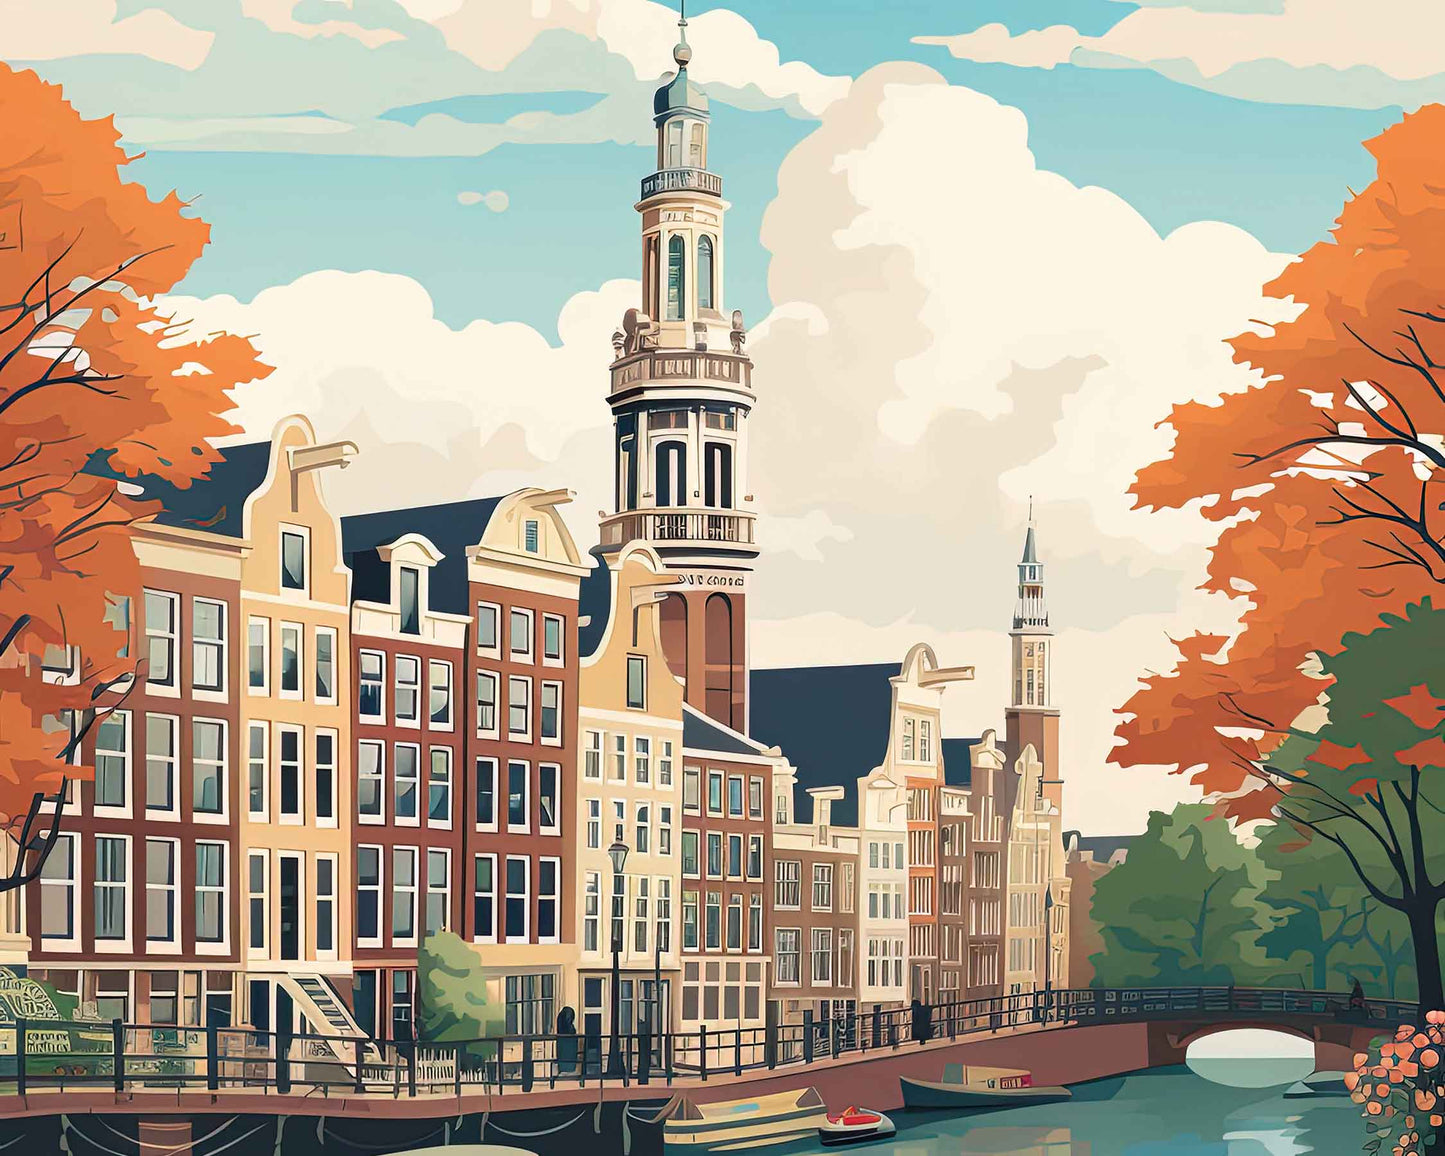 Framed Image of Amsterdam Travel Art Print Wall Poster Holland Illustration